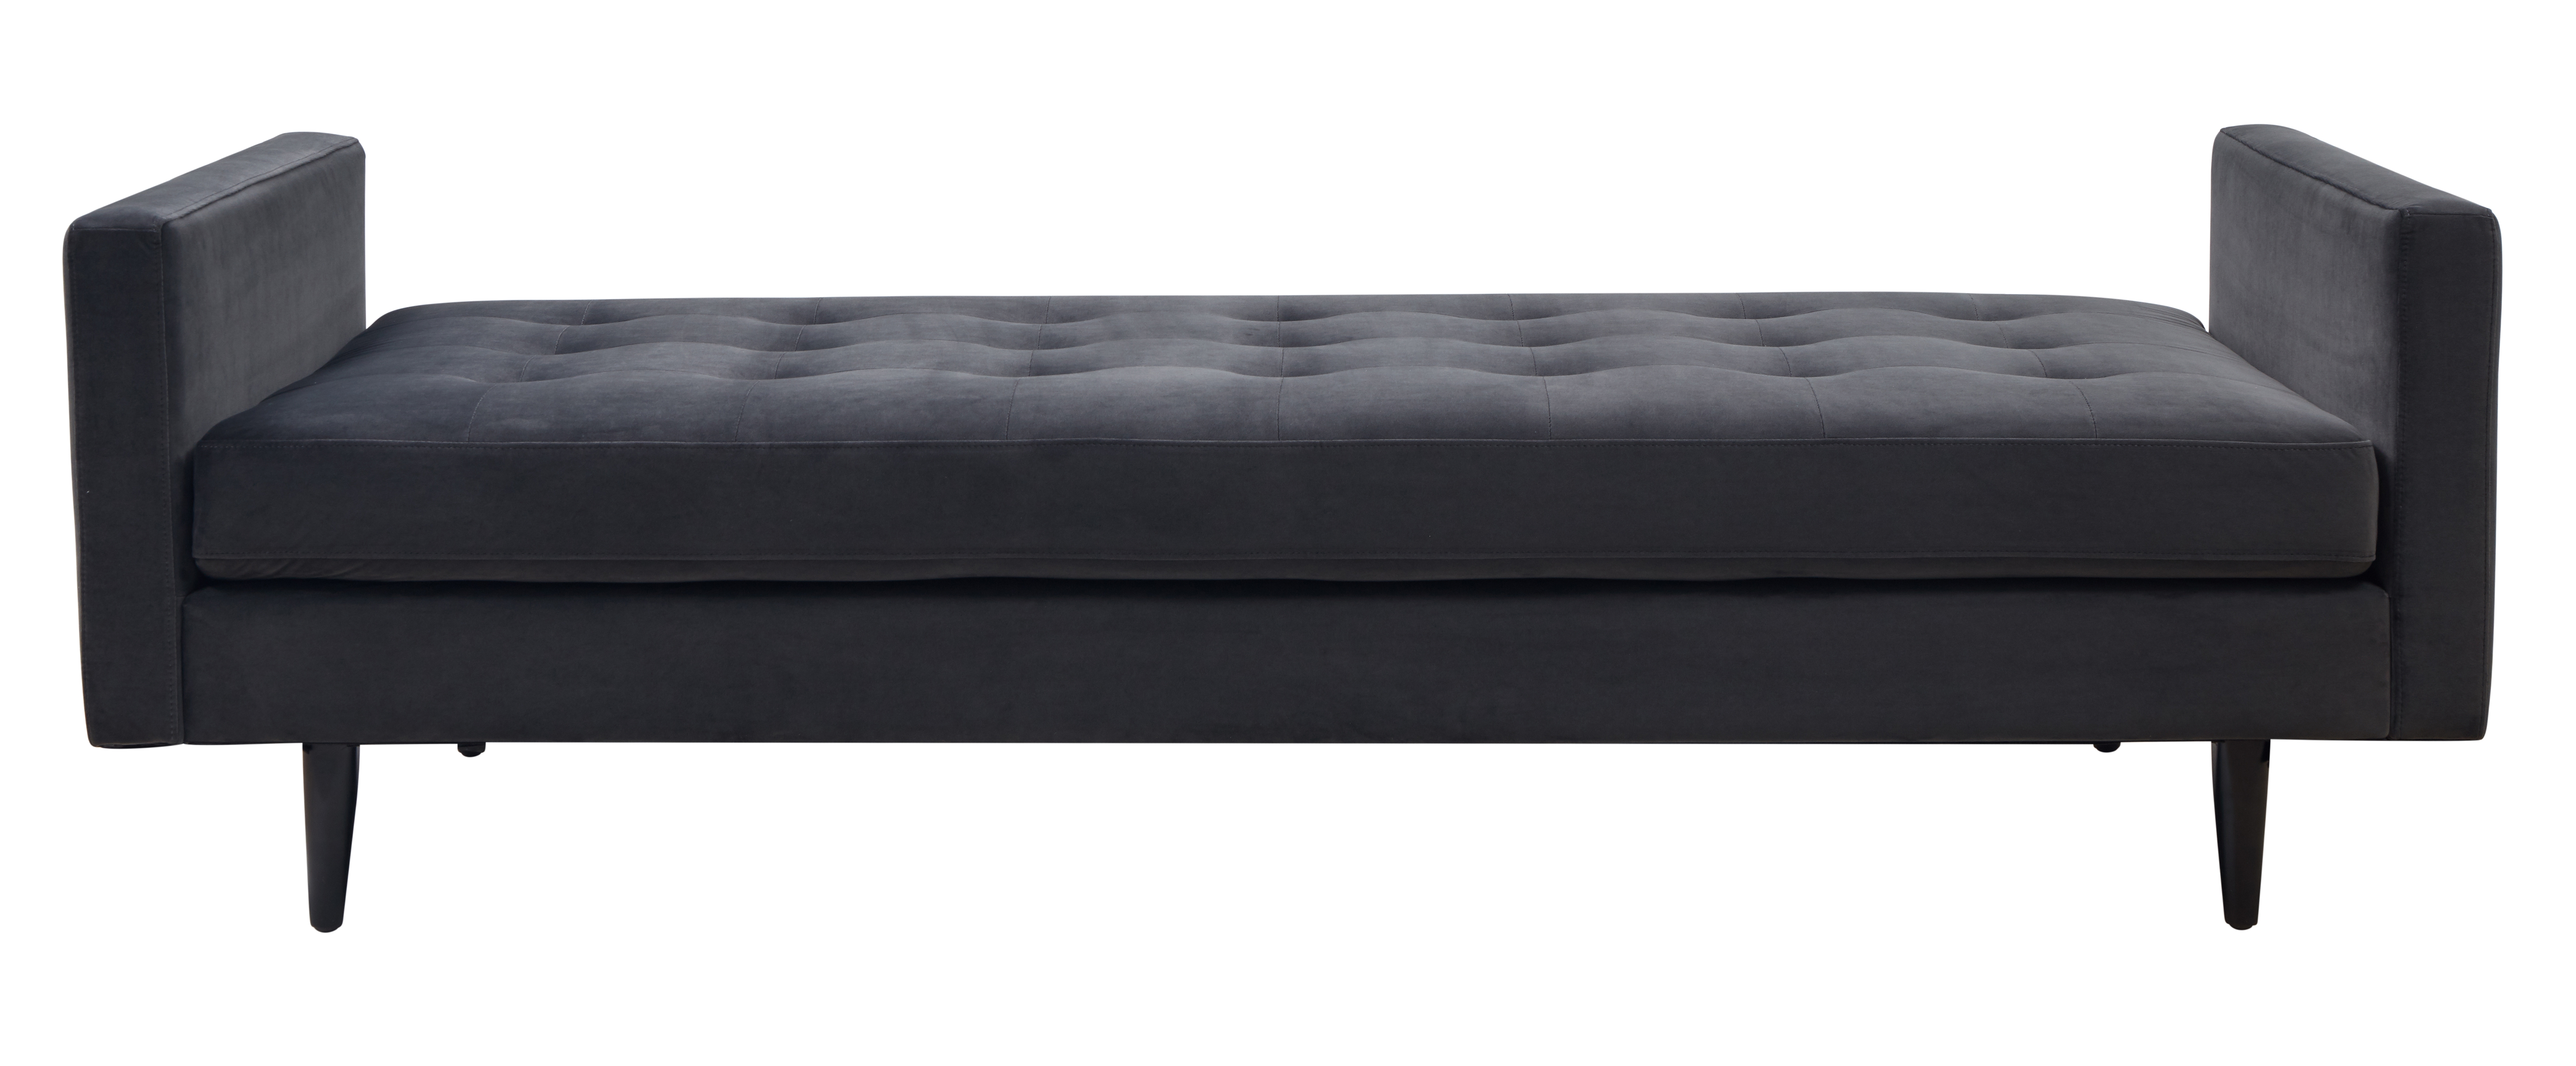 Francine Upholstered Bench - Dark Grey - Arlo Home - Arlo Home